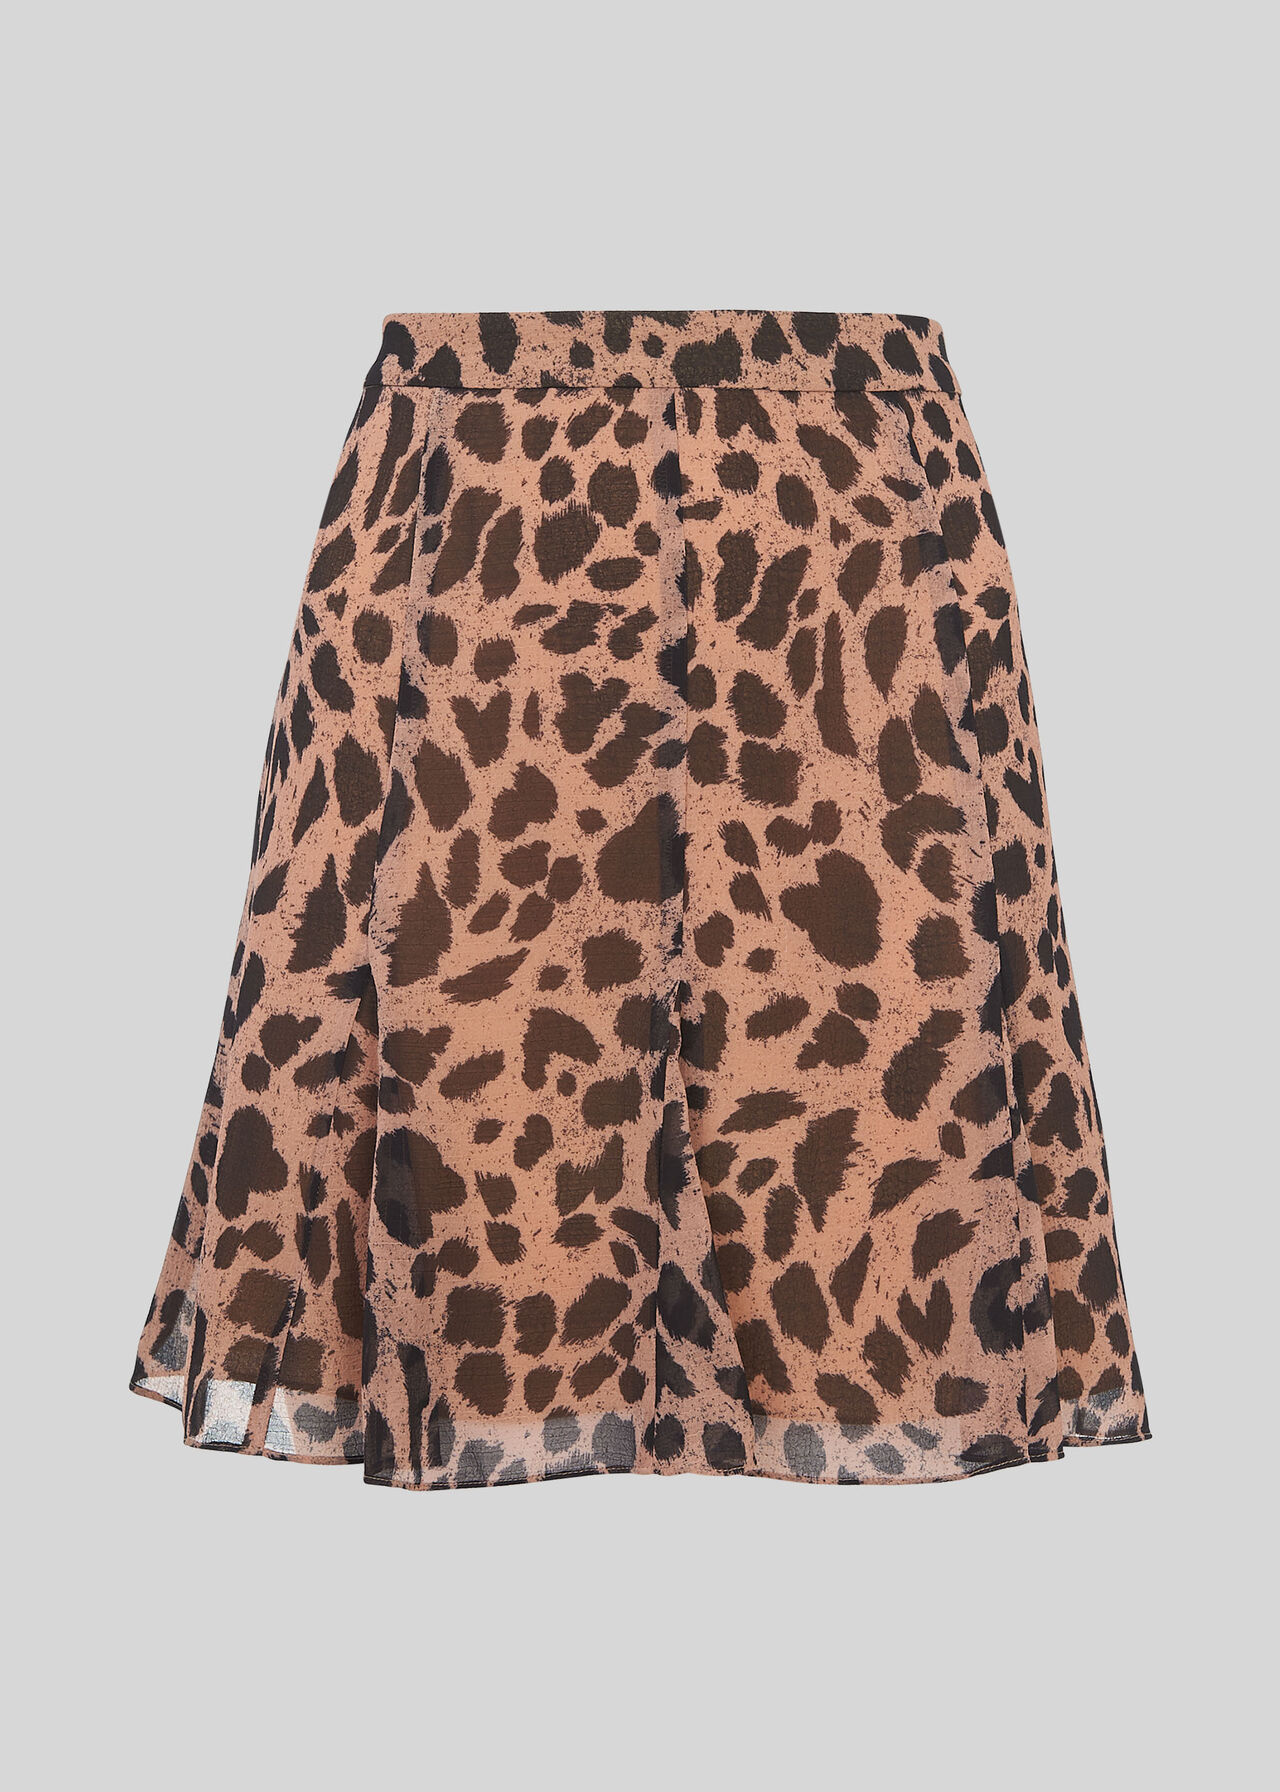 Brushed Cheetah Flippy Skirt Leopard Print